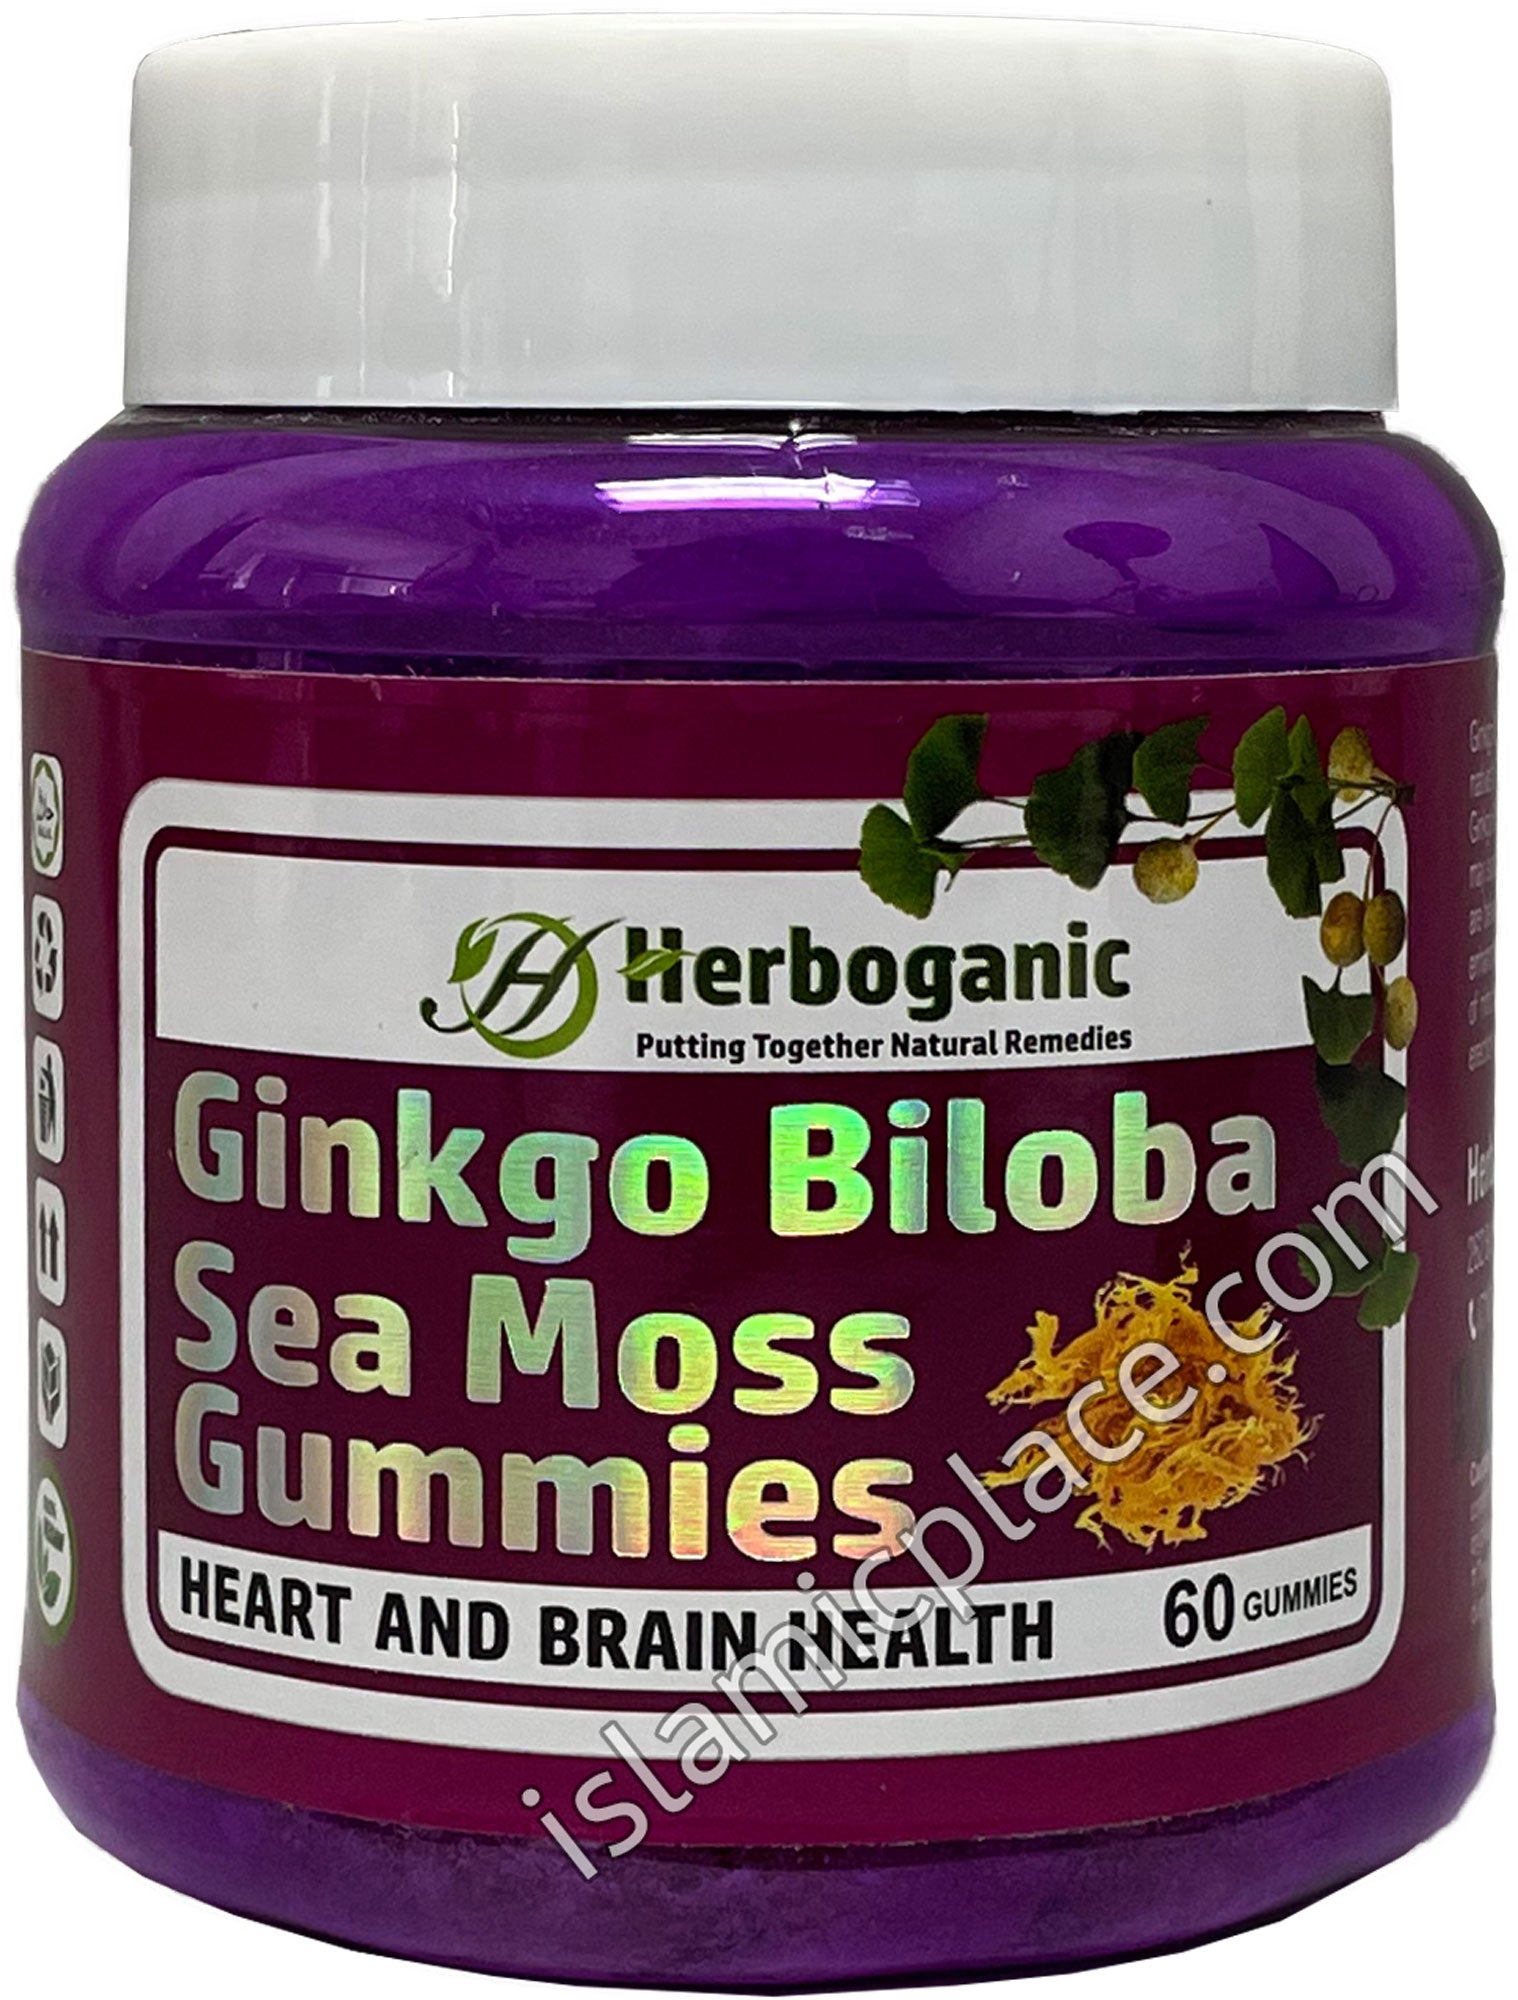 Ginkgo Biloba Sea Moss Gummies - 60 Gummies